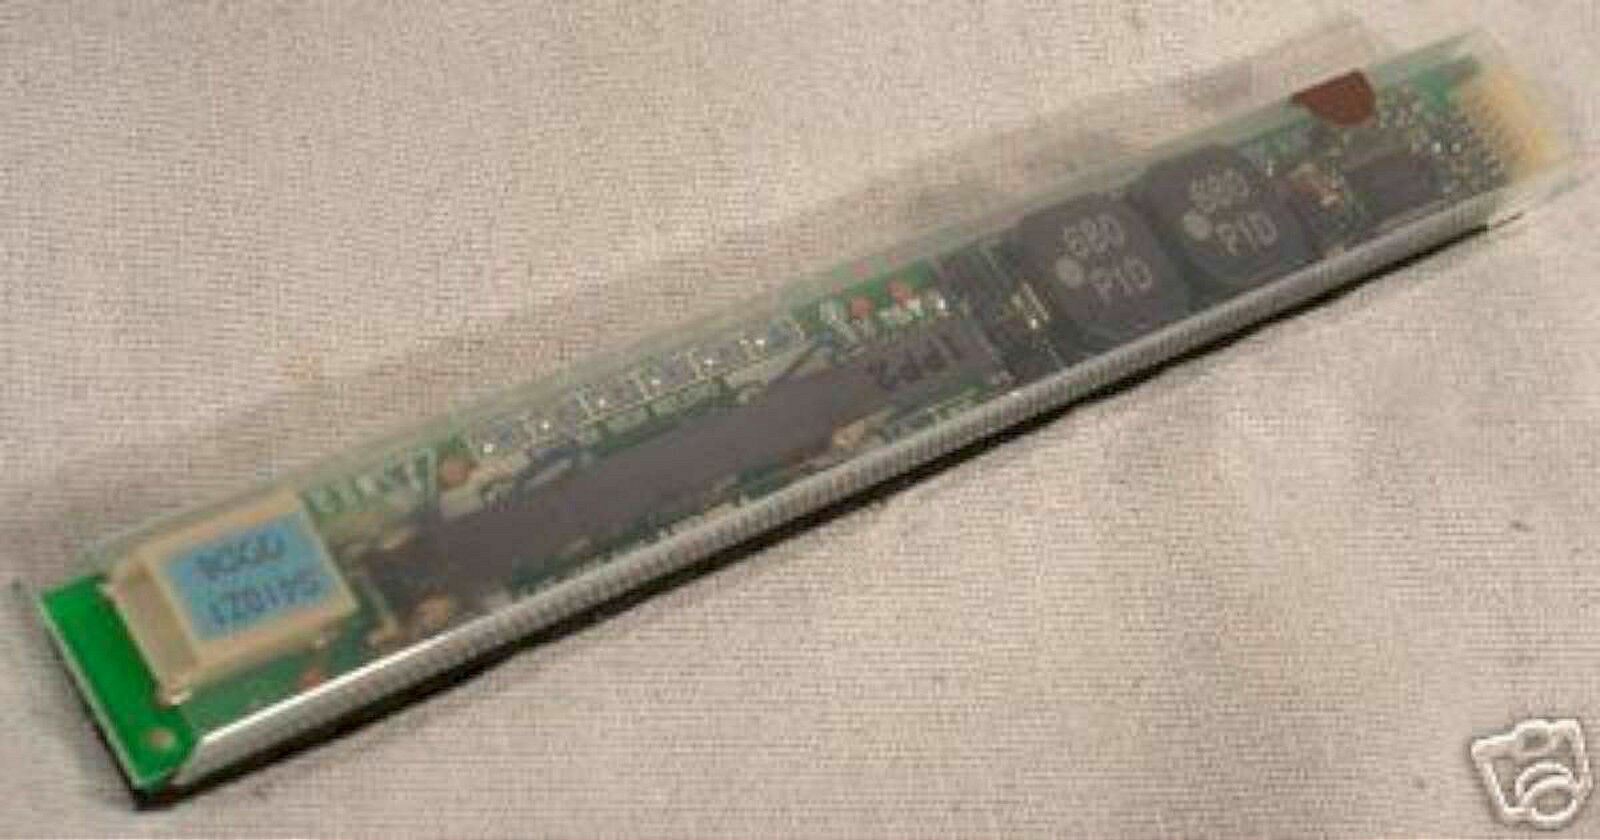 Sony Vaio Laptop PCG-GRV GRX NV K LCD INVERTER BOARD 147631631 notebook - $14.06